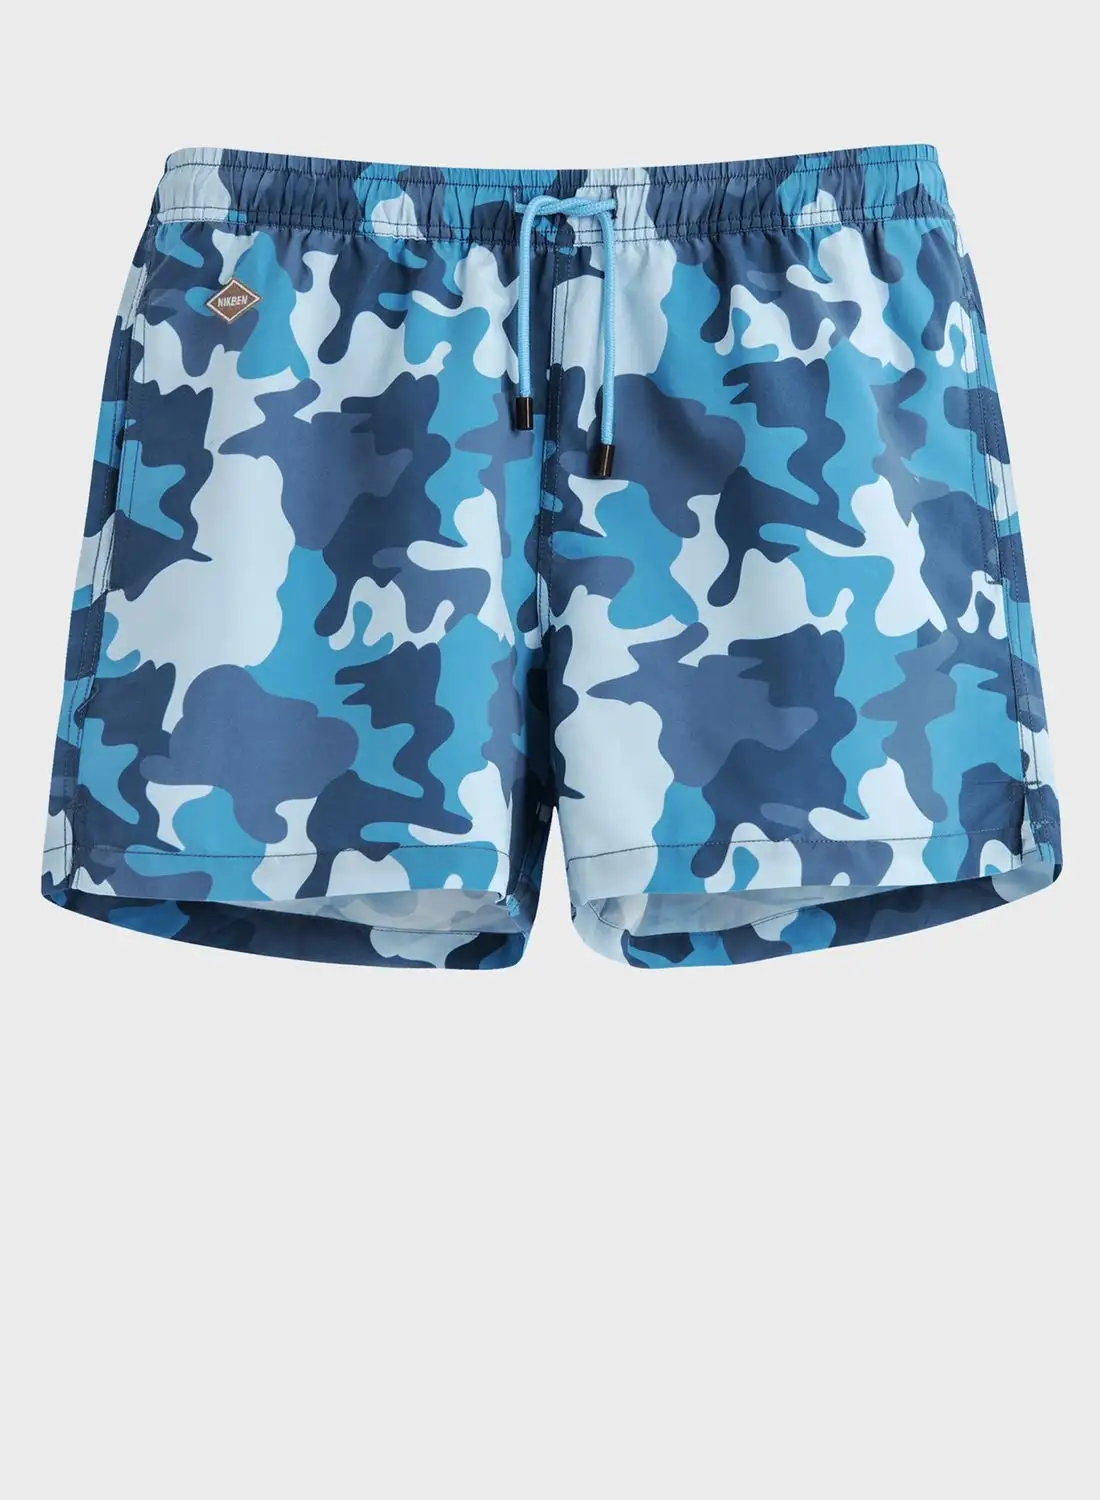 NIKBEN Camo Printed Swim Shorts